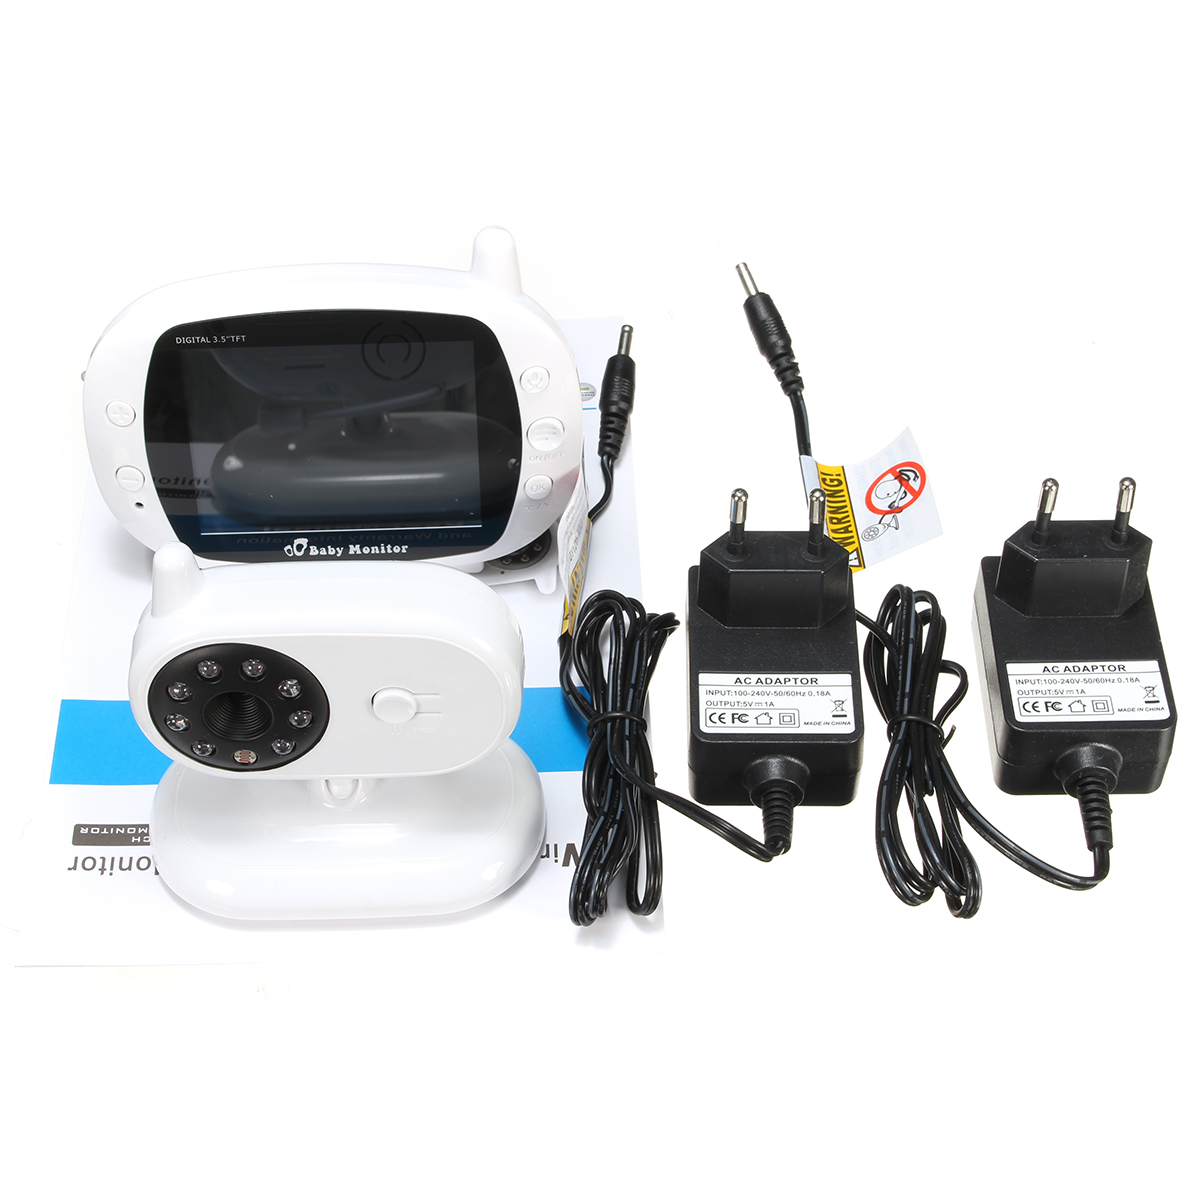 2.4G Wireless Digital 3.5 inch LCD Baby Monitor Camera Audio Talk Video Night Vision 22